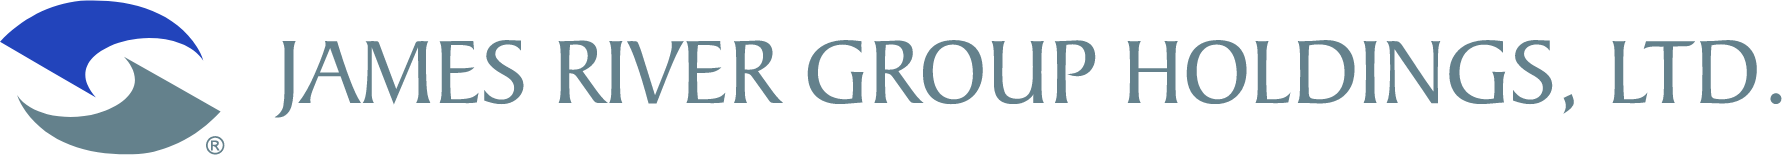 James River Group logo large (transparent PNG)